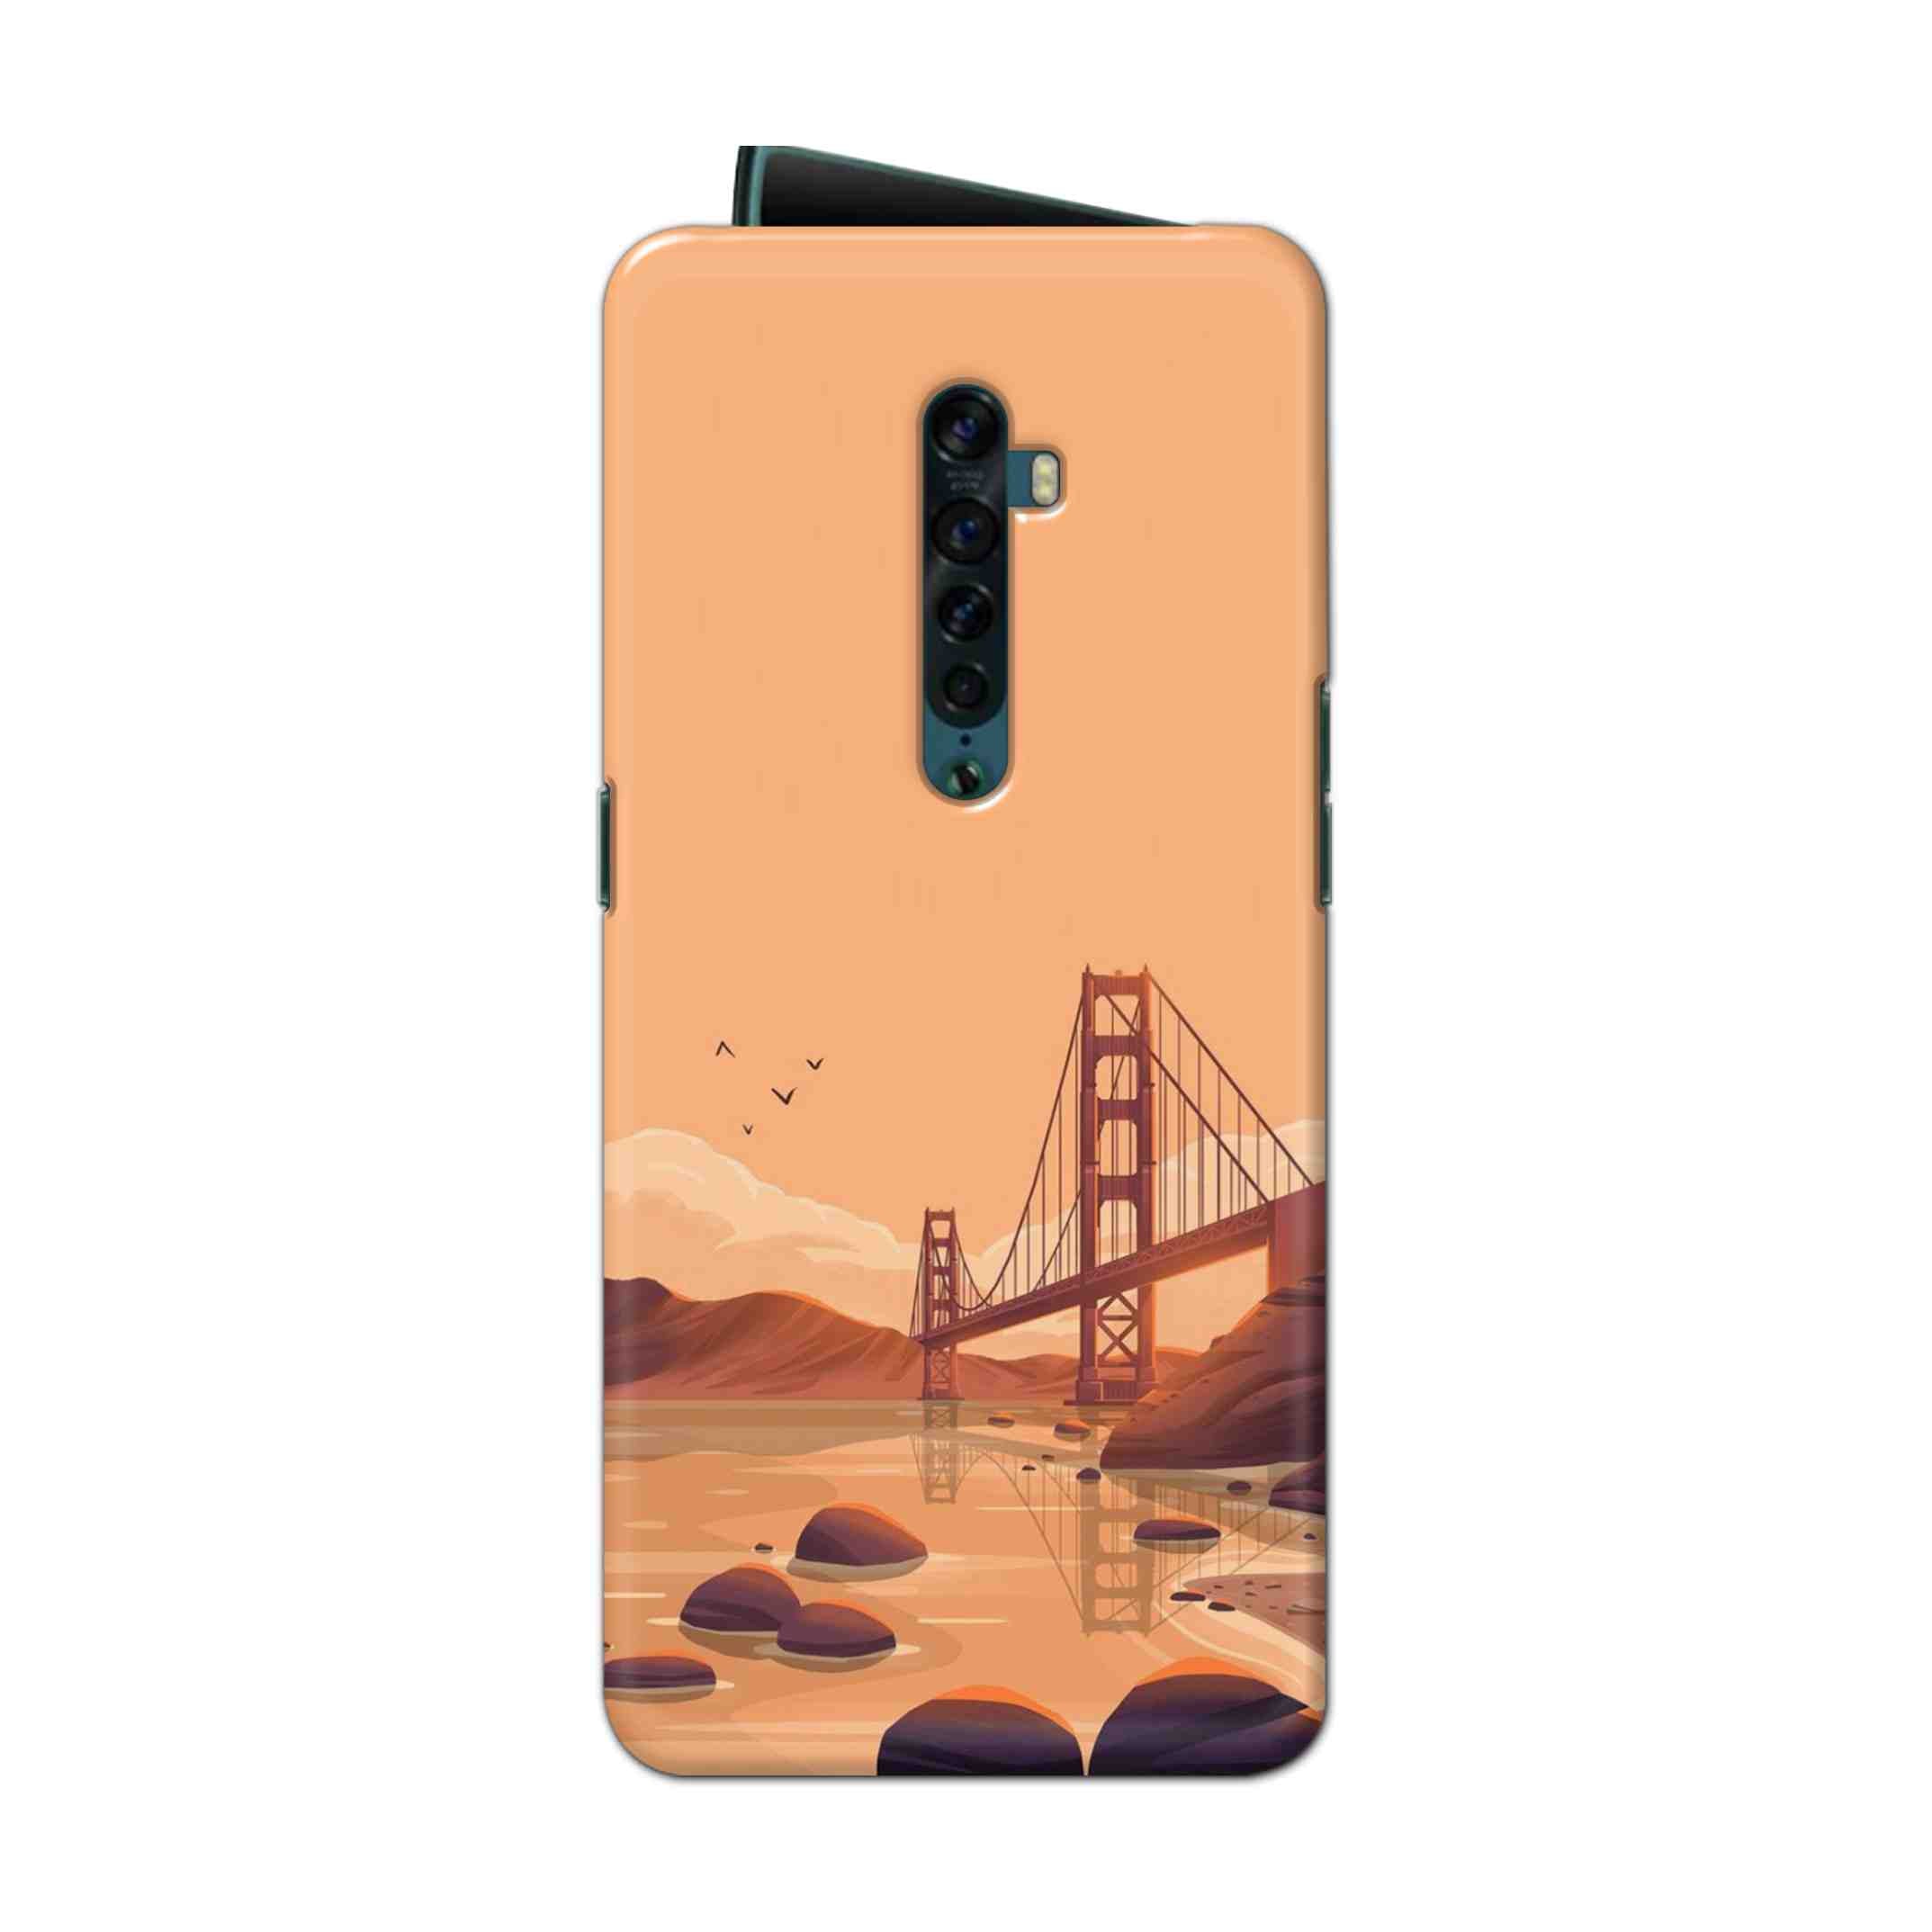 Buy San Francisco Hard Back Mobile Phone Case Cover For Oppo Reno 2 Online